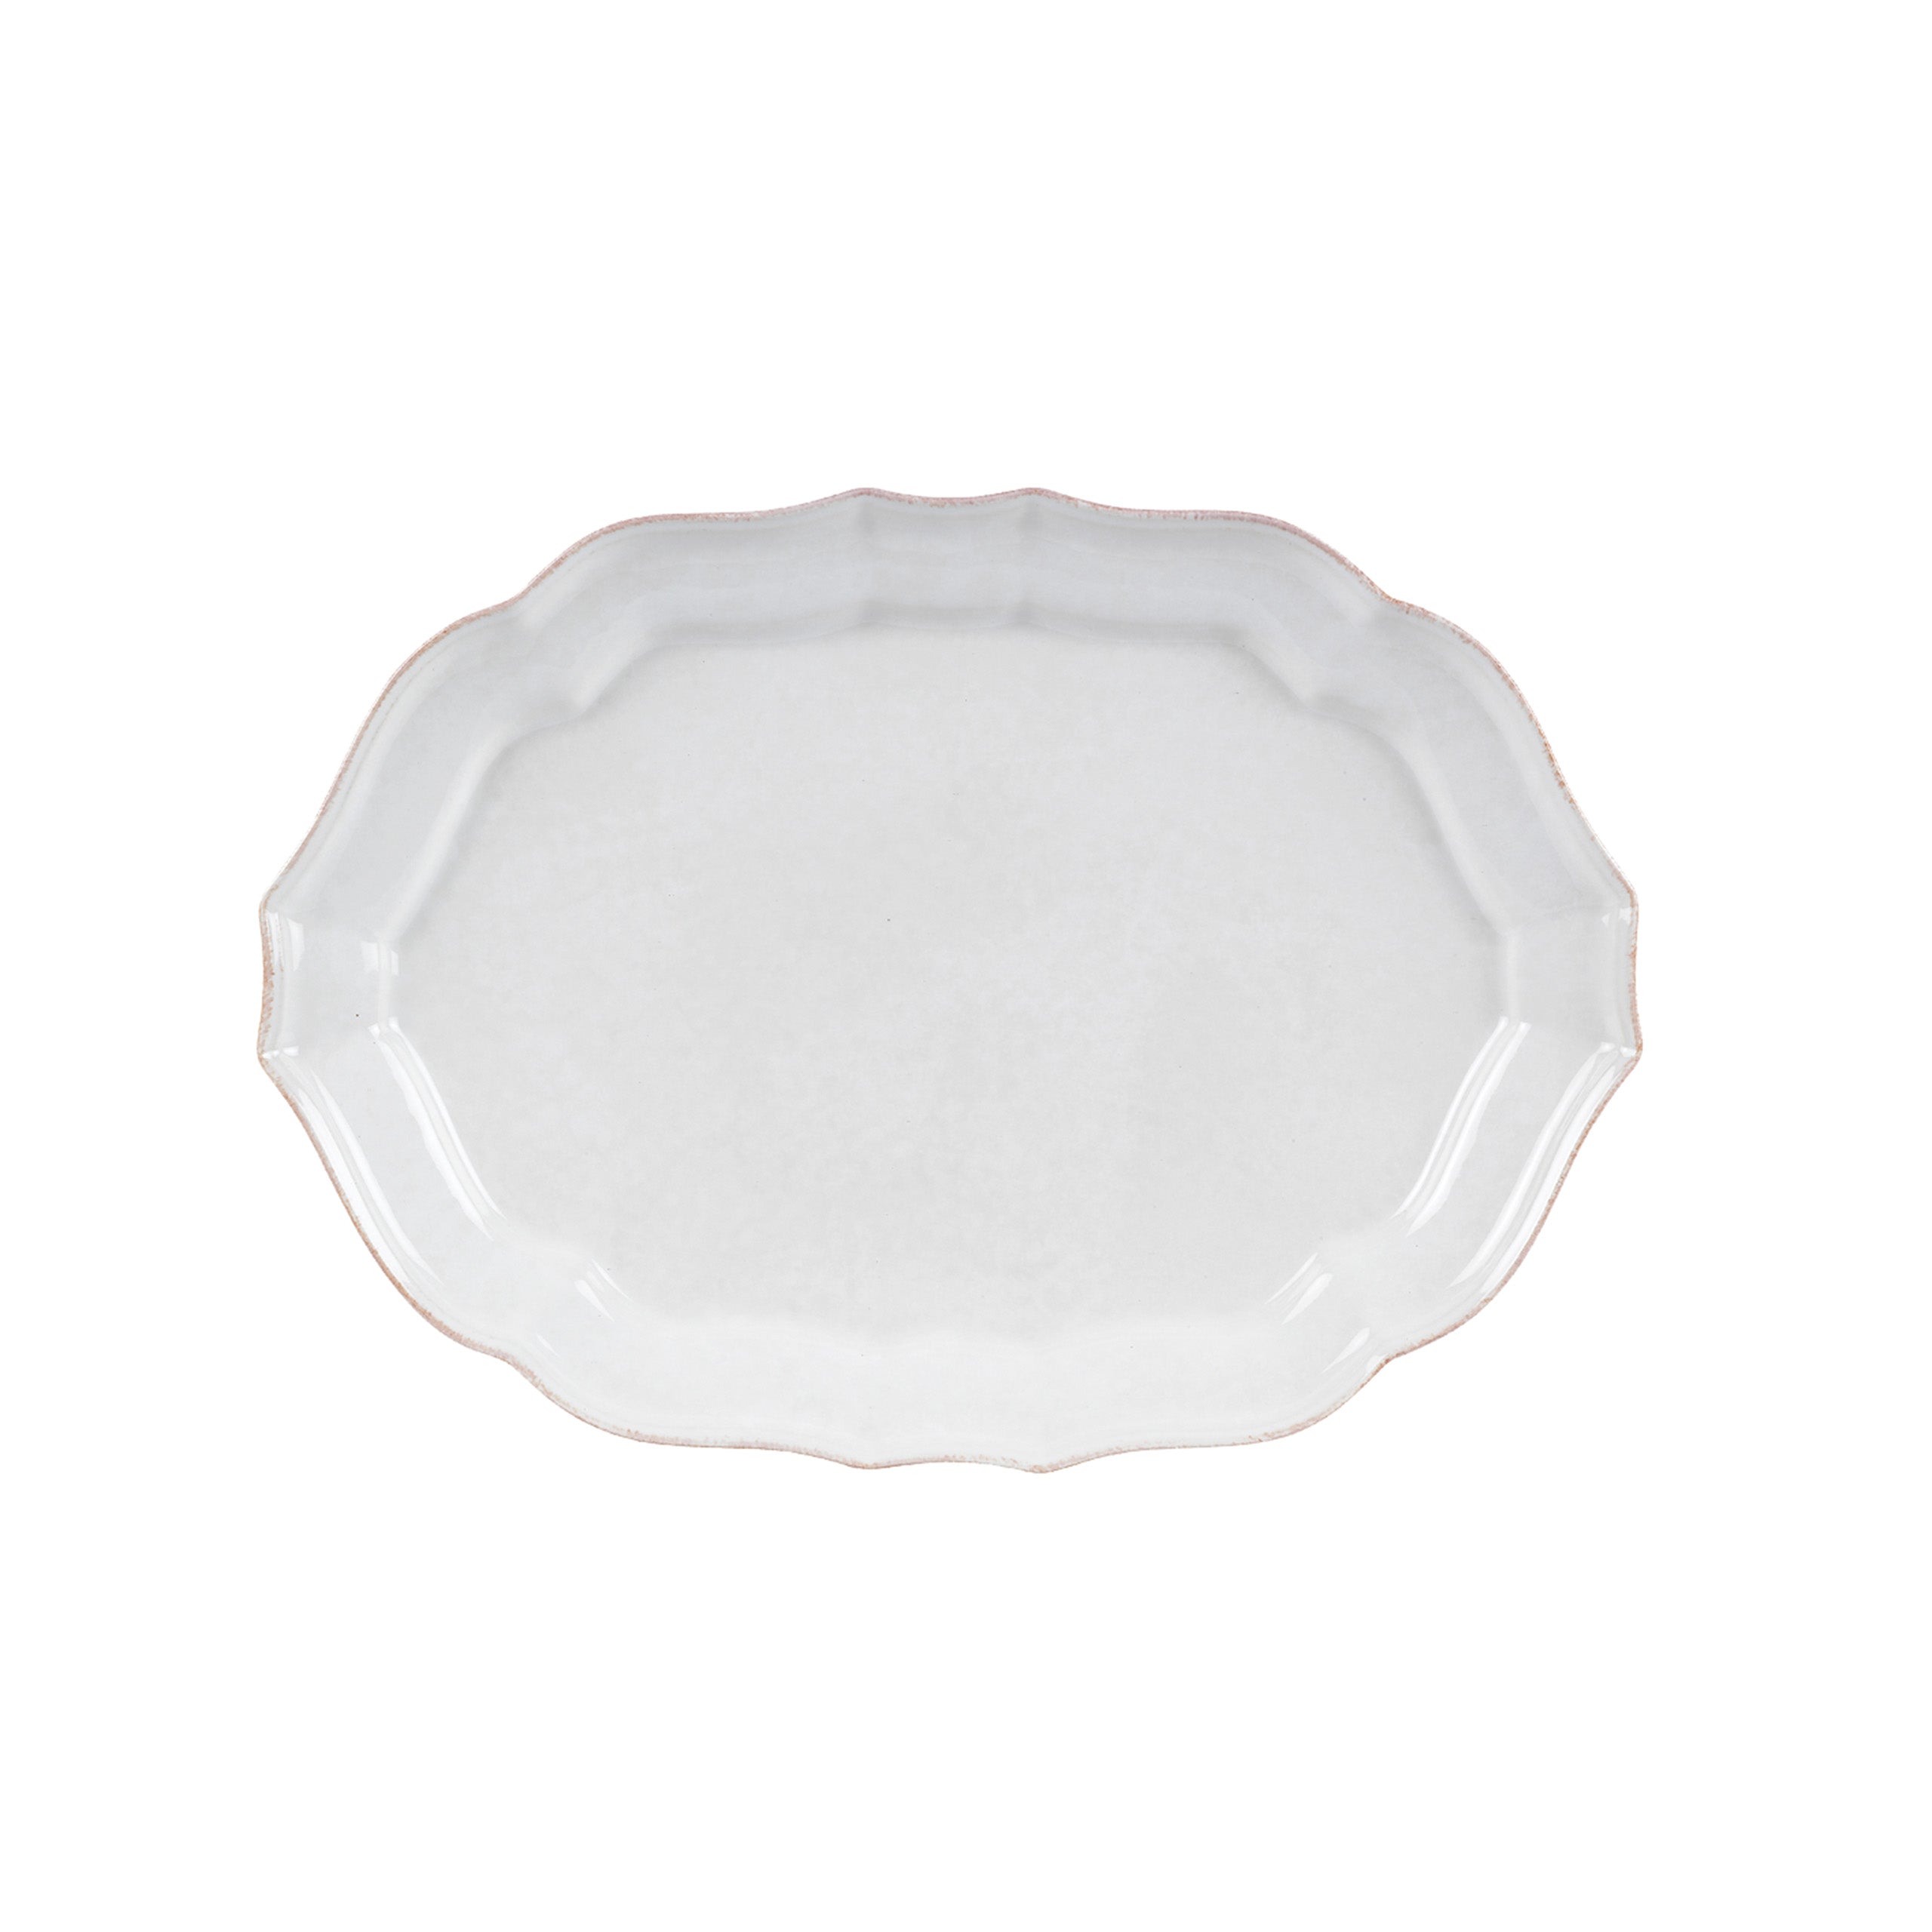 Impressions Oval Platter 14" White